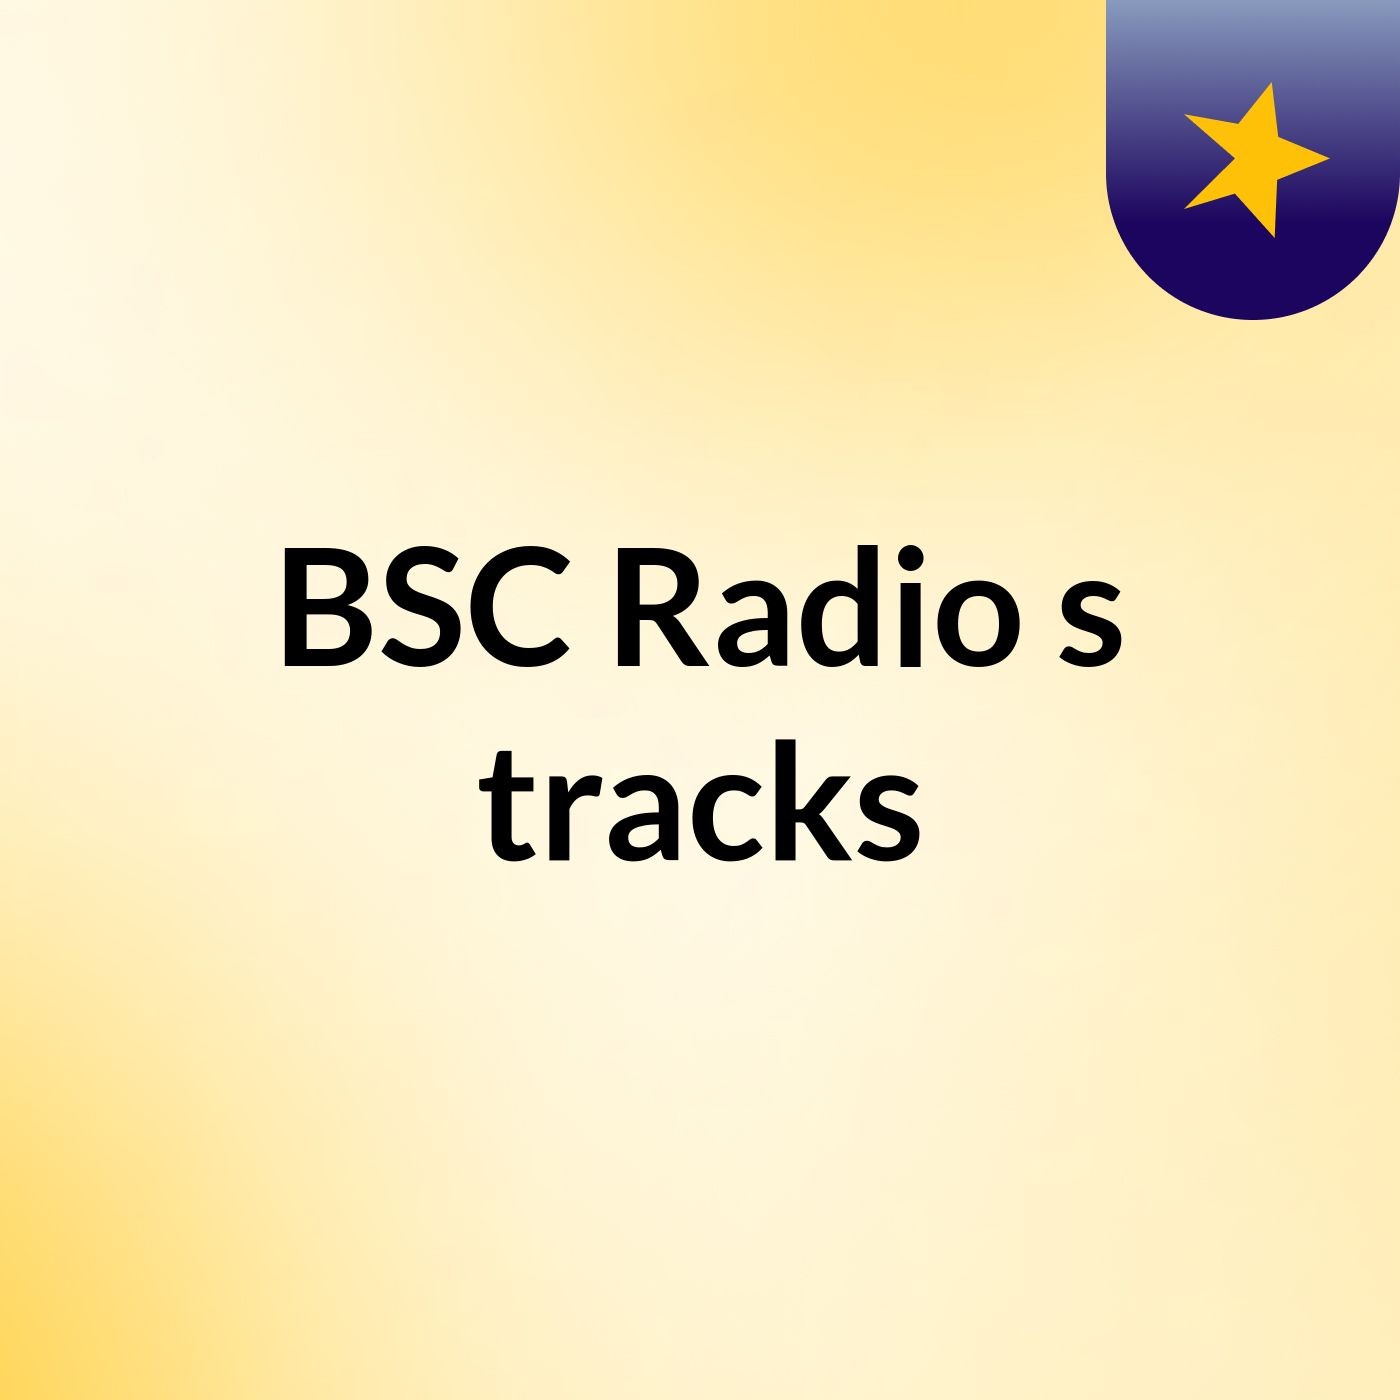 BSC Radio's tracks